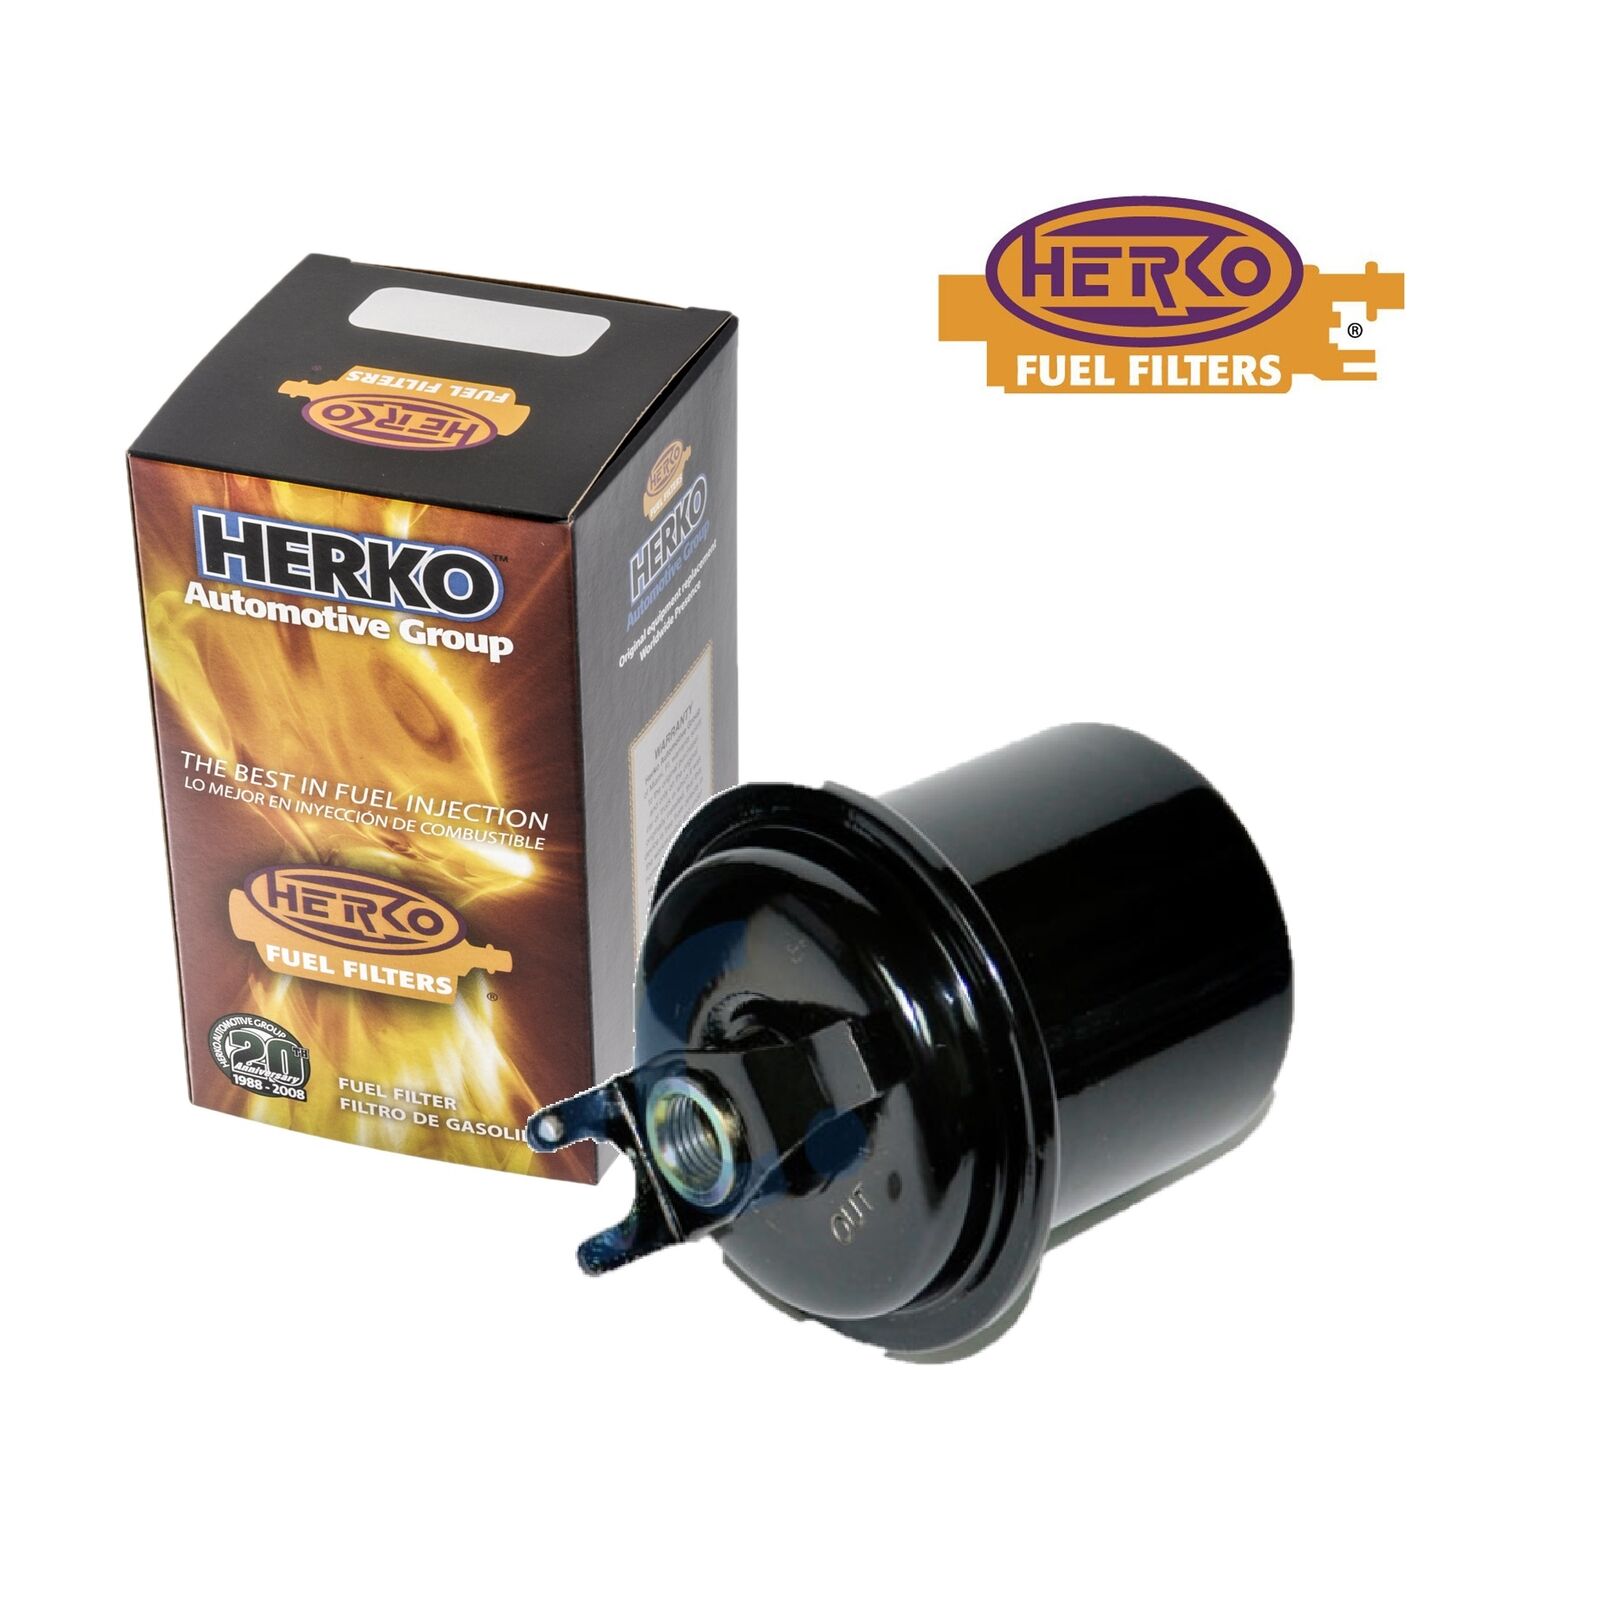 Herko Fuel Filter FIH05 For Acura Honda Isuzu Accord Civic Civic del Sol 94-01